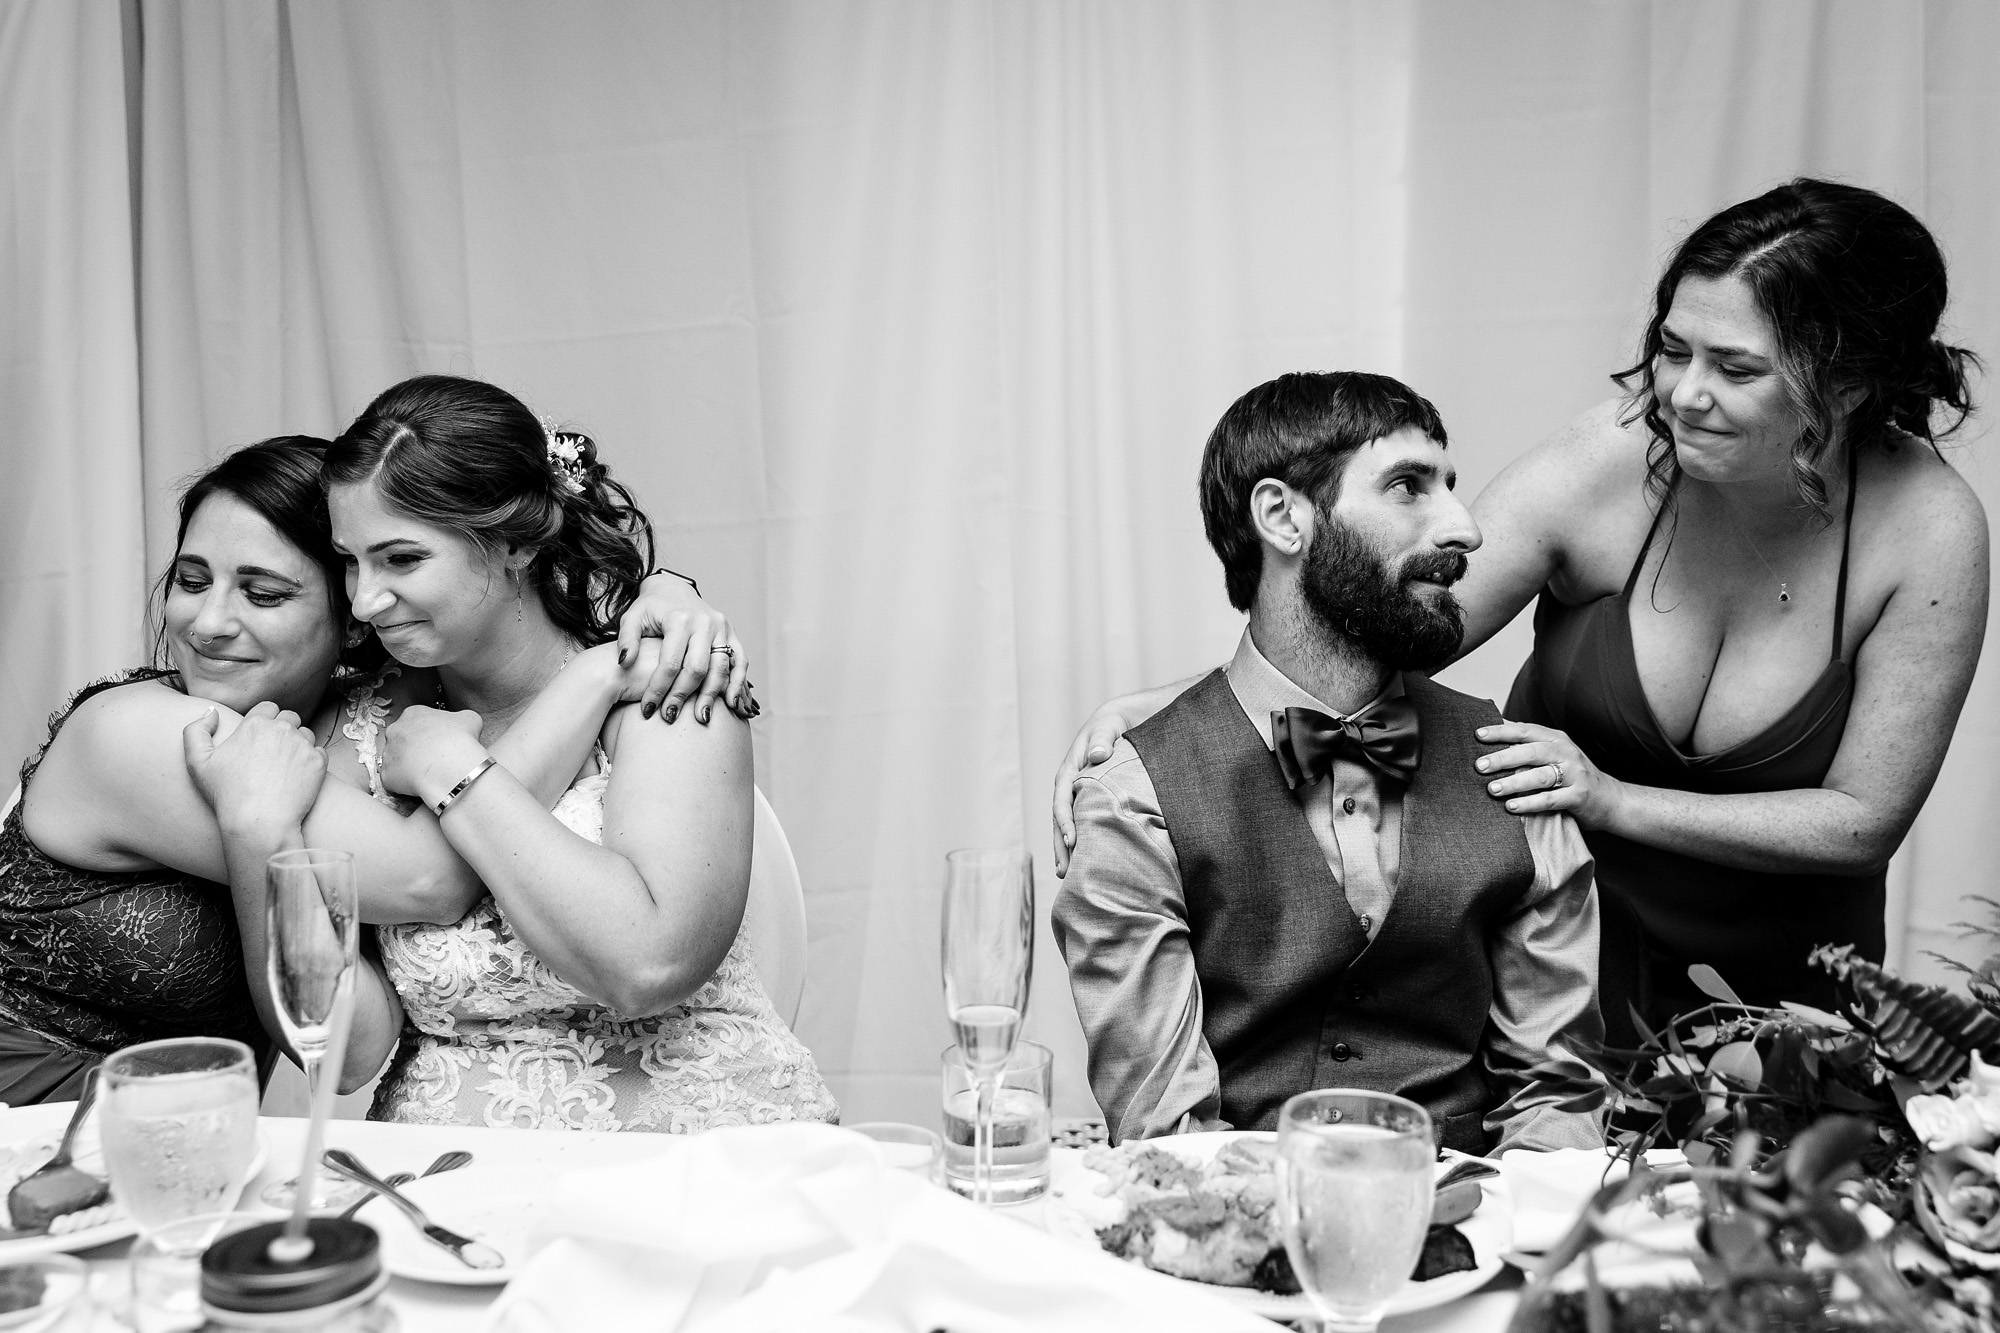 Best Maine wedding photos of 2021